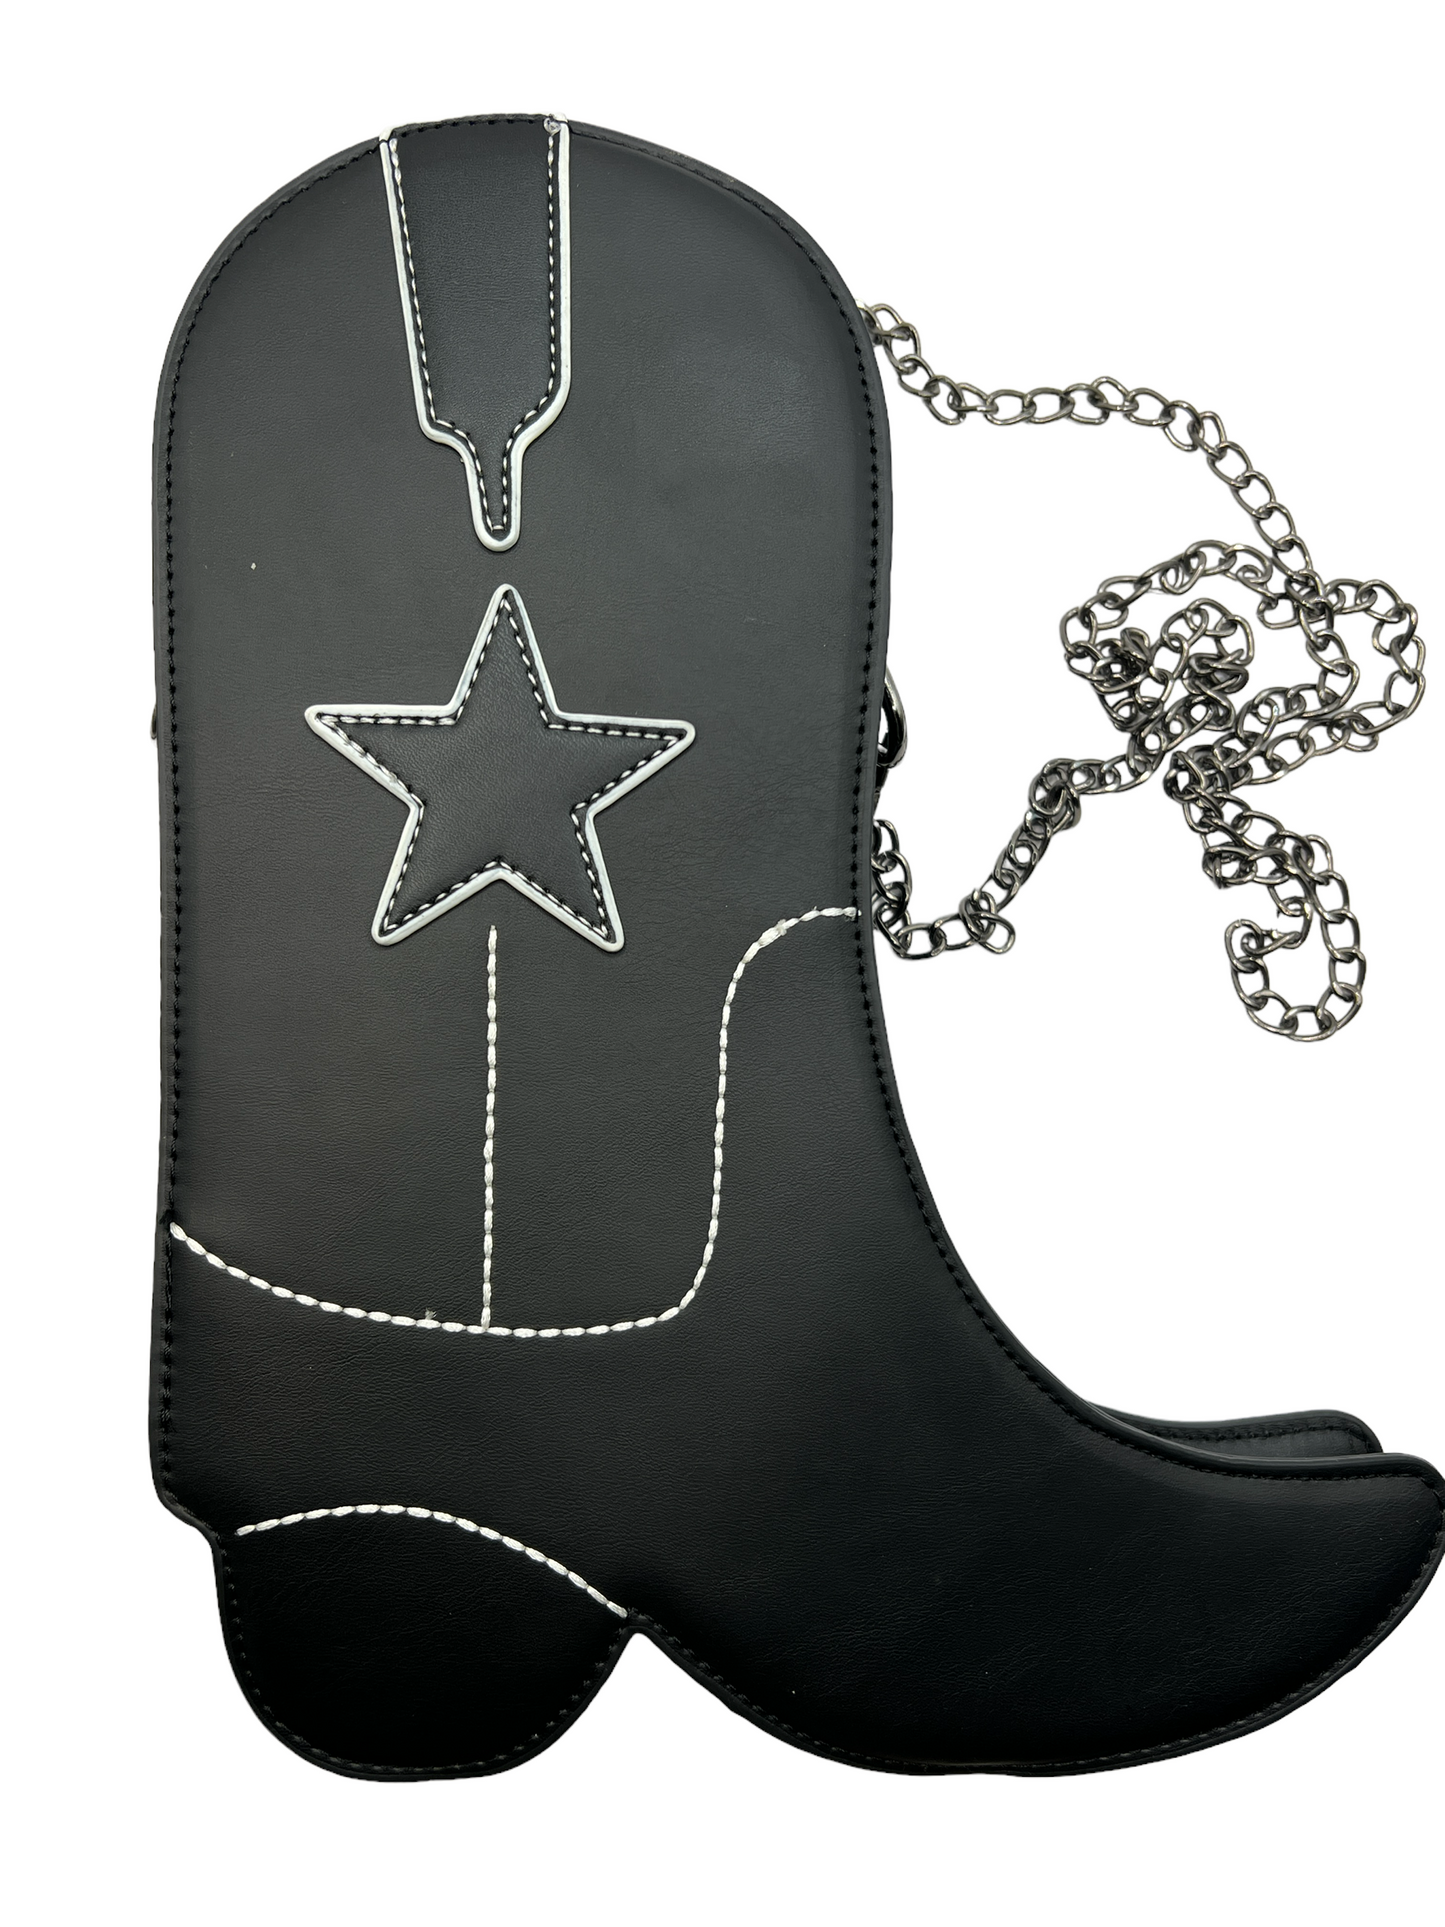 Cowboy Boot Purse